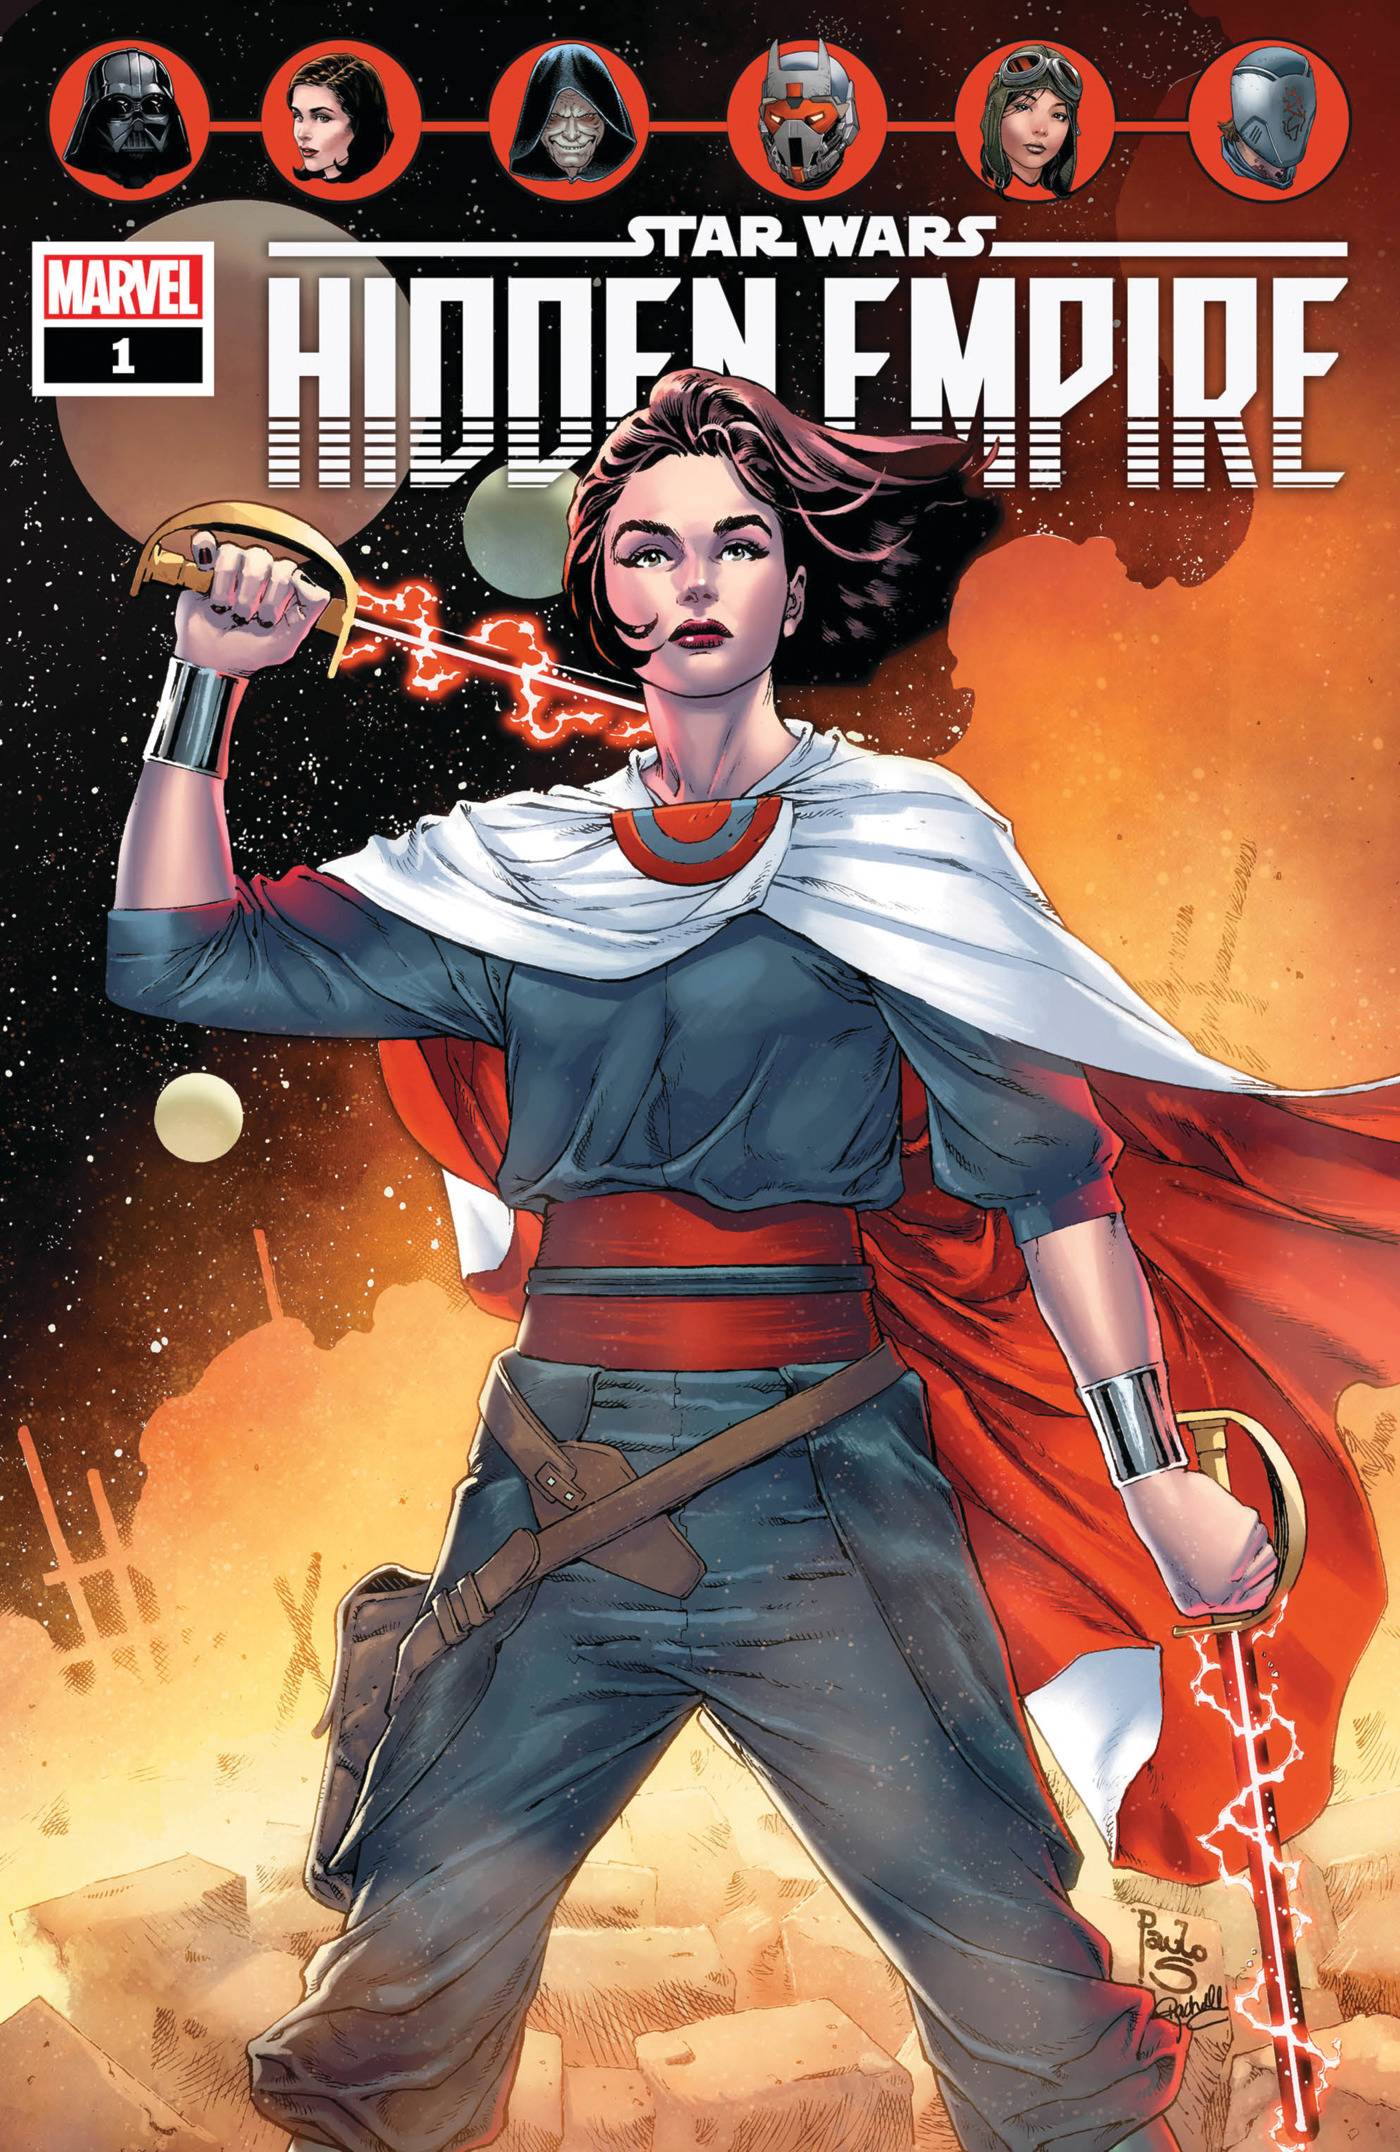 Star Wars Hidden Empire #1 (Of 5) - State of Comics